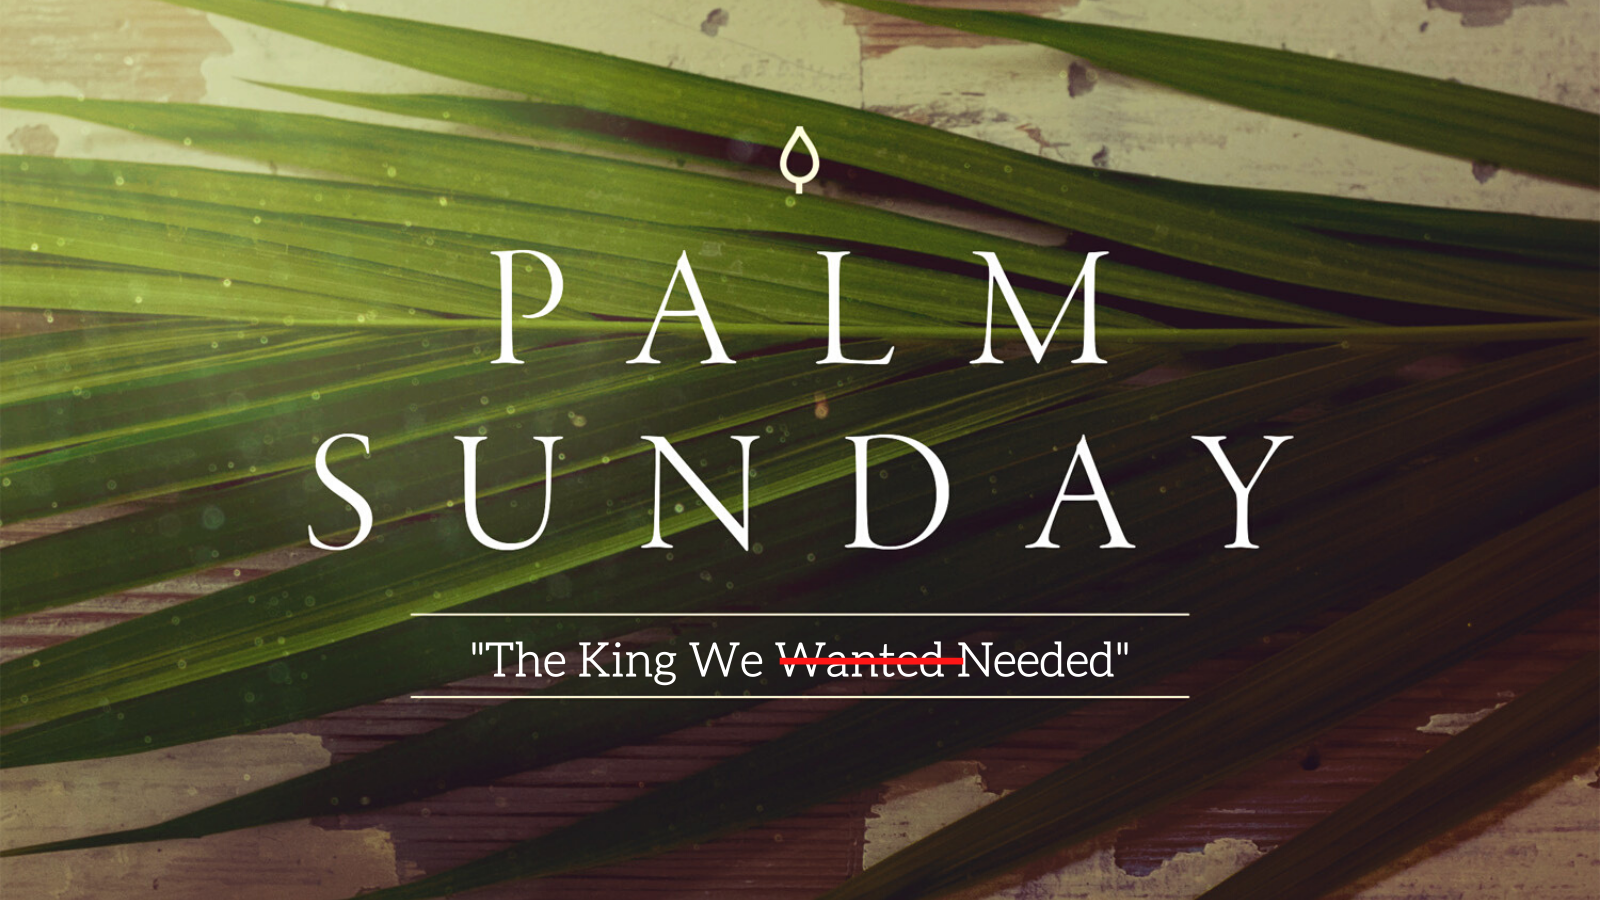 Palm sunday sermon image